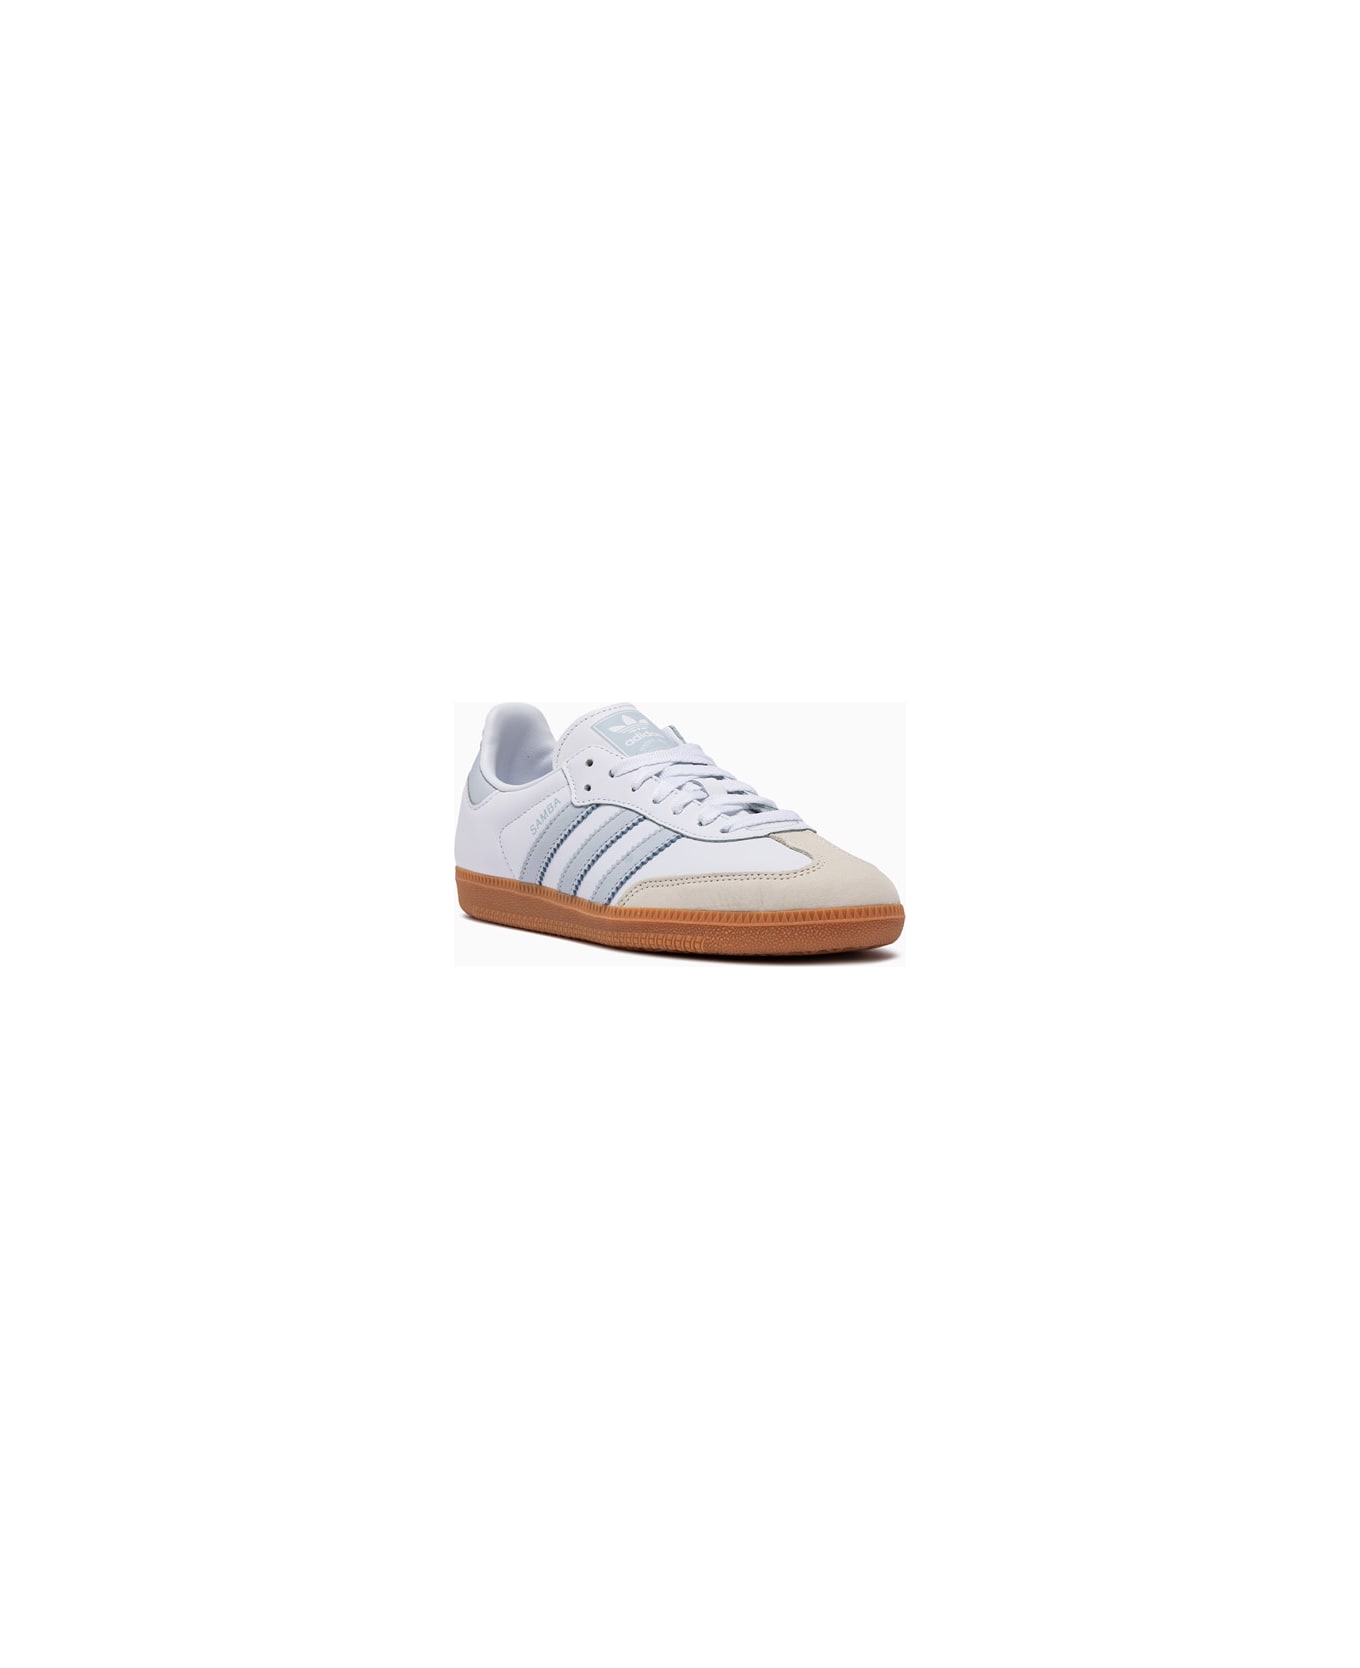 Adidas Samba Og W Sneakers Ie0877 - White